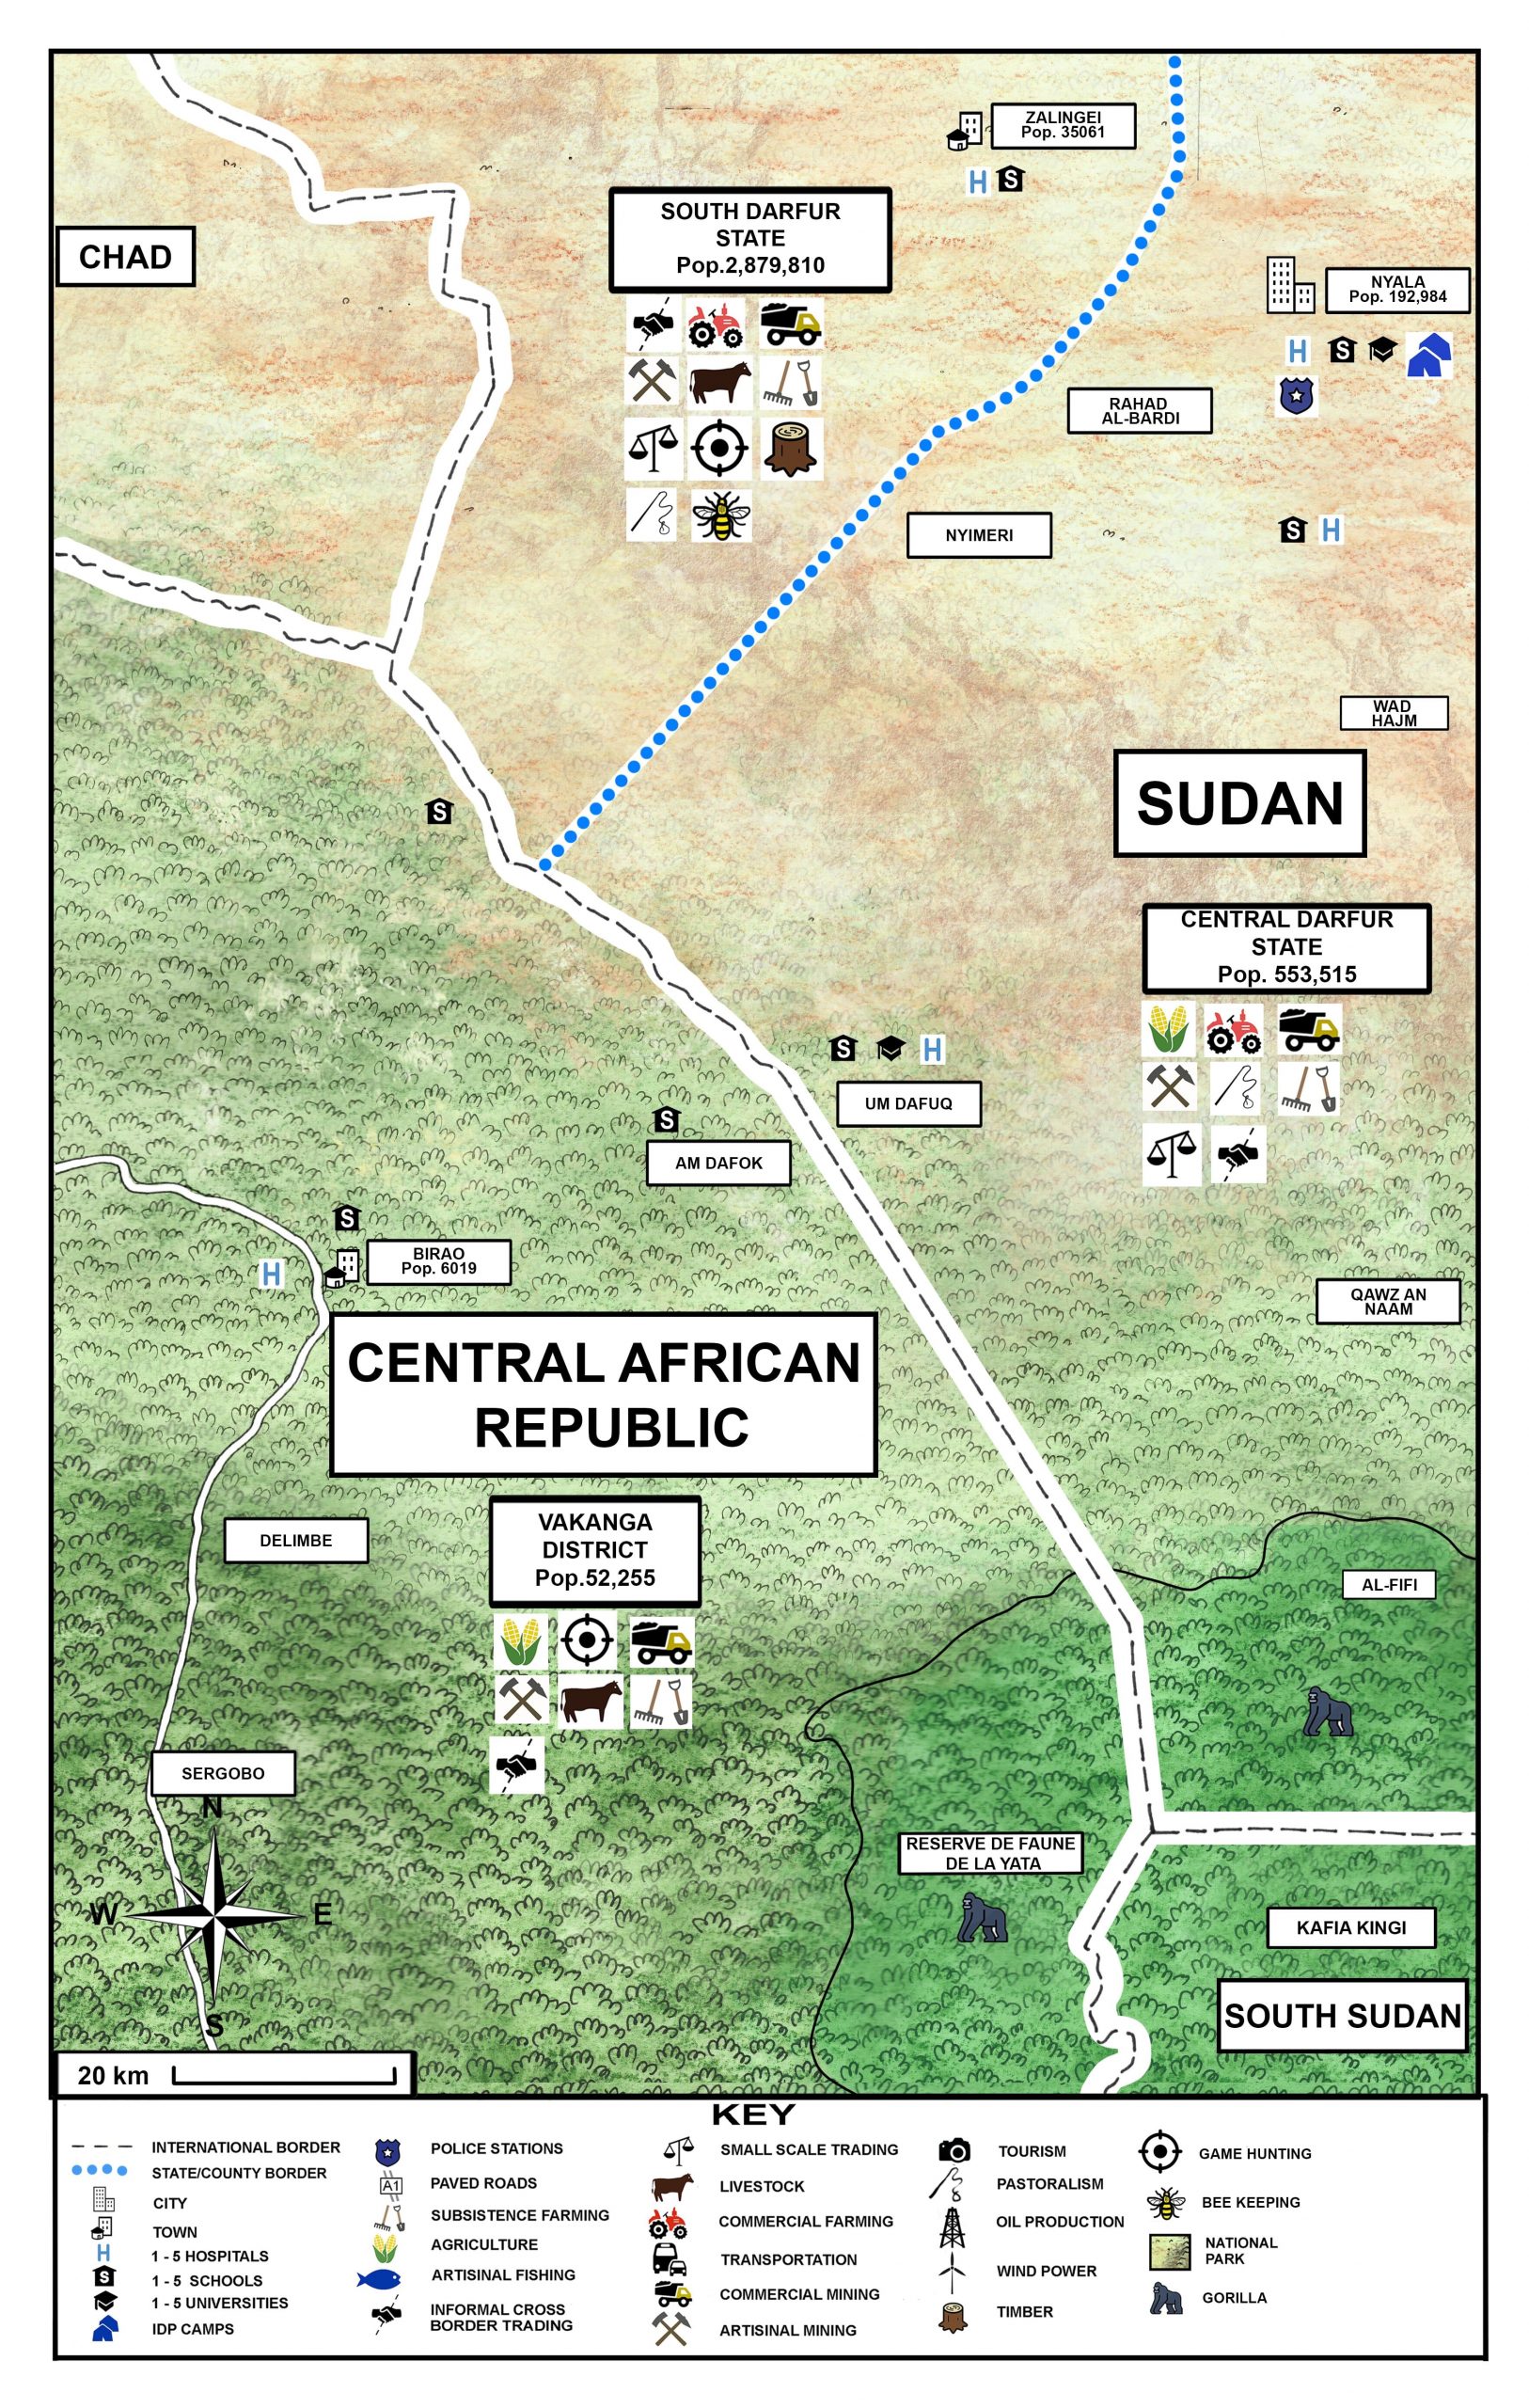 CENTRAL AFRICAN REPUBLIC - SUDAN_illustration